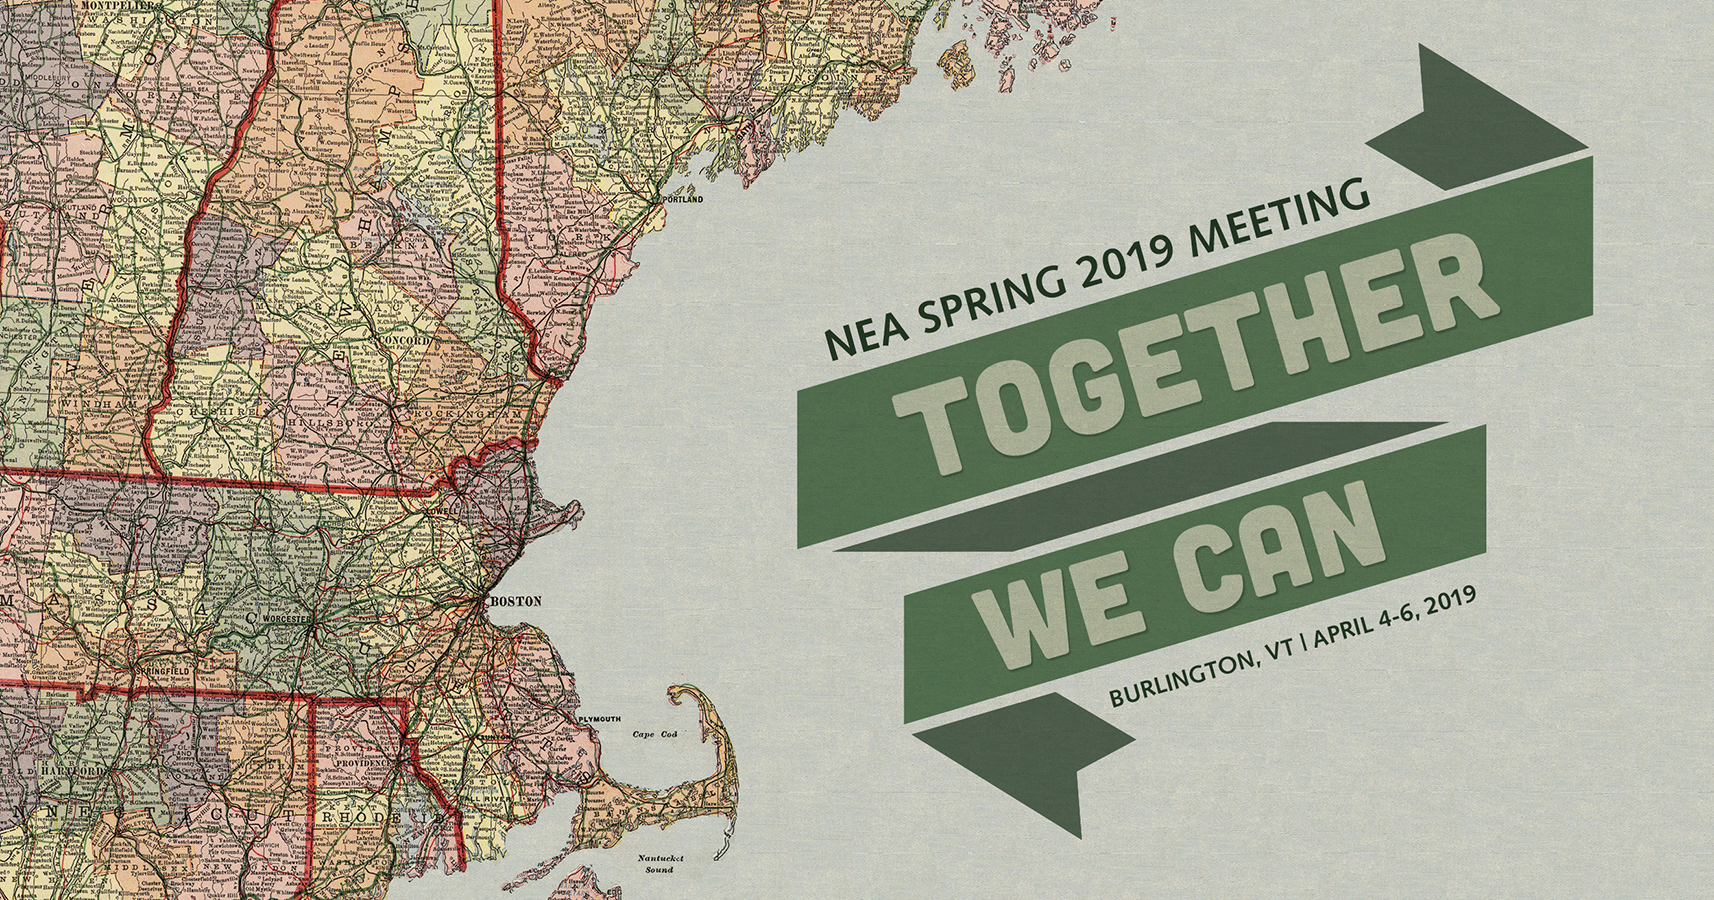 Together We Can, Hilton Burlington, Burlington, VT April 4-6, 2019